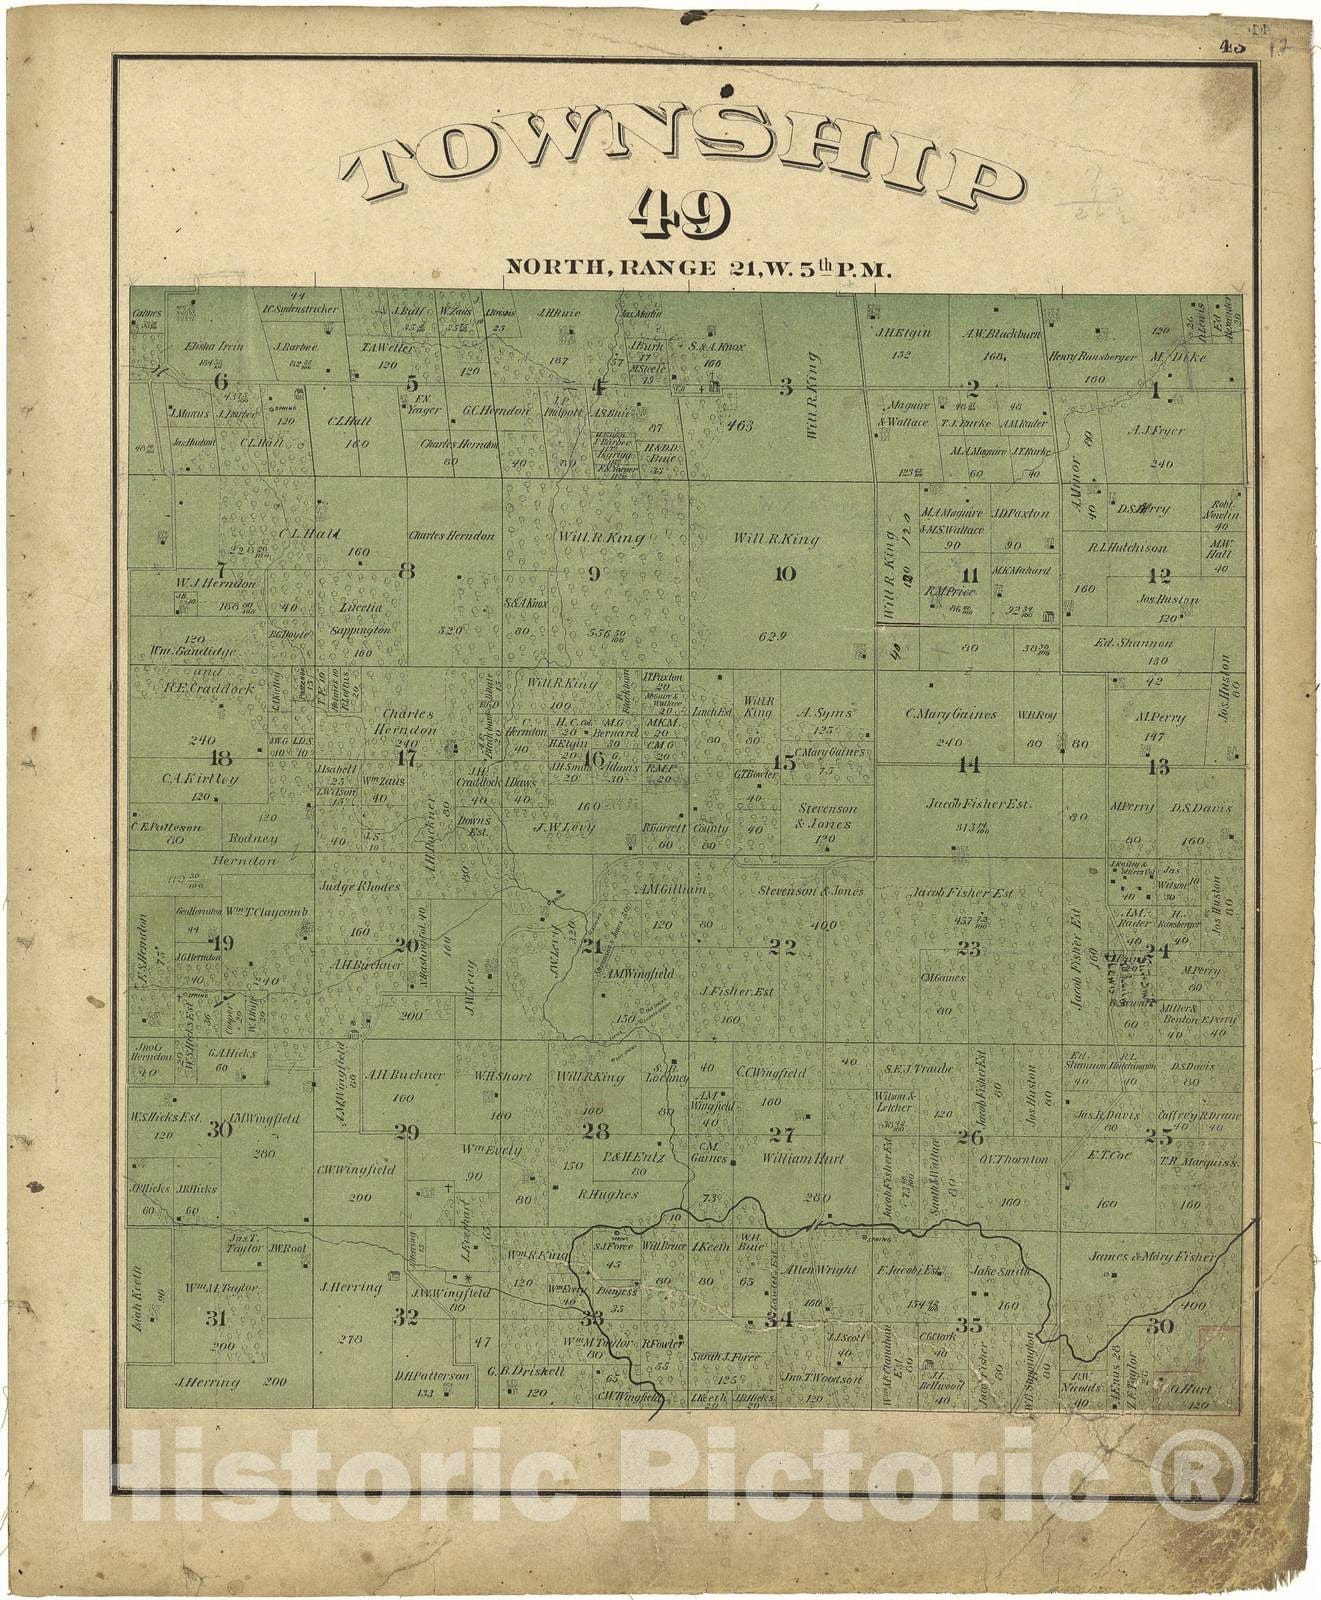 Historic 1876 Map - Township plats : Saline County, Missouri. - Township 49 North, Range 20W. 5th P.M. - Illustrated Atlas map of Saline County, Missouri